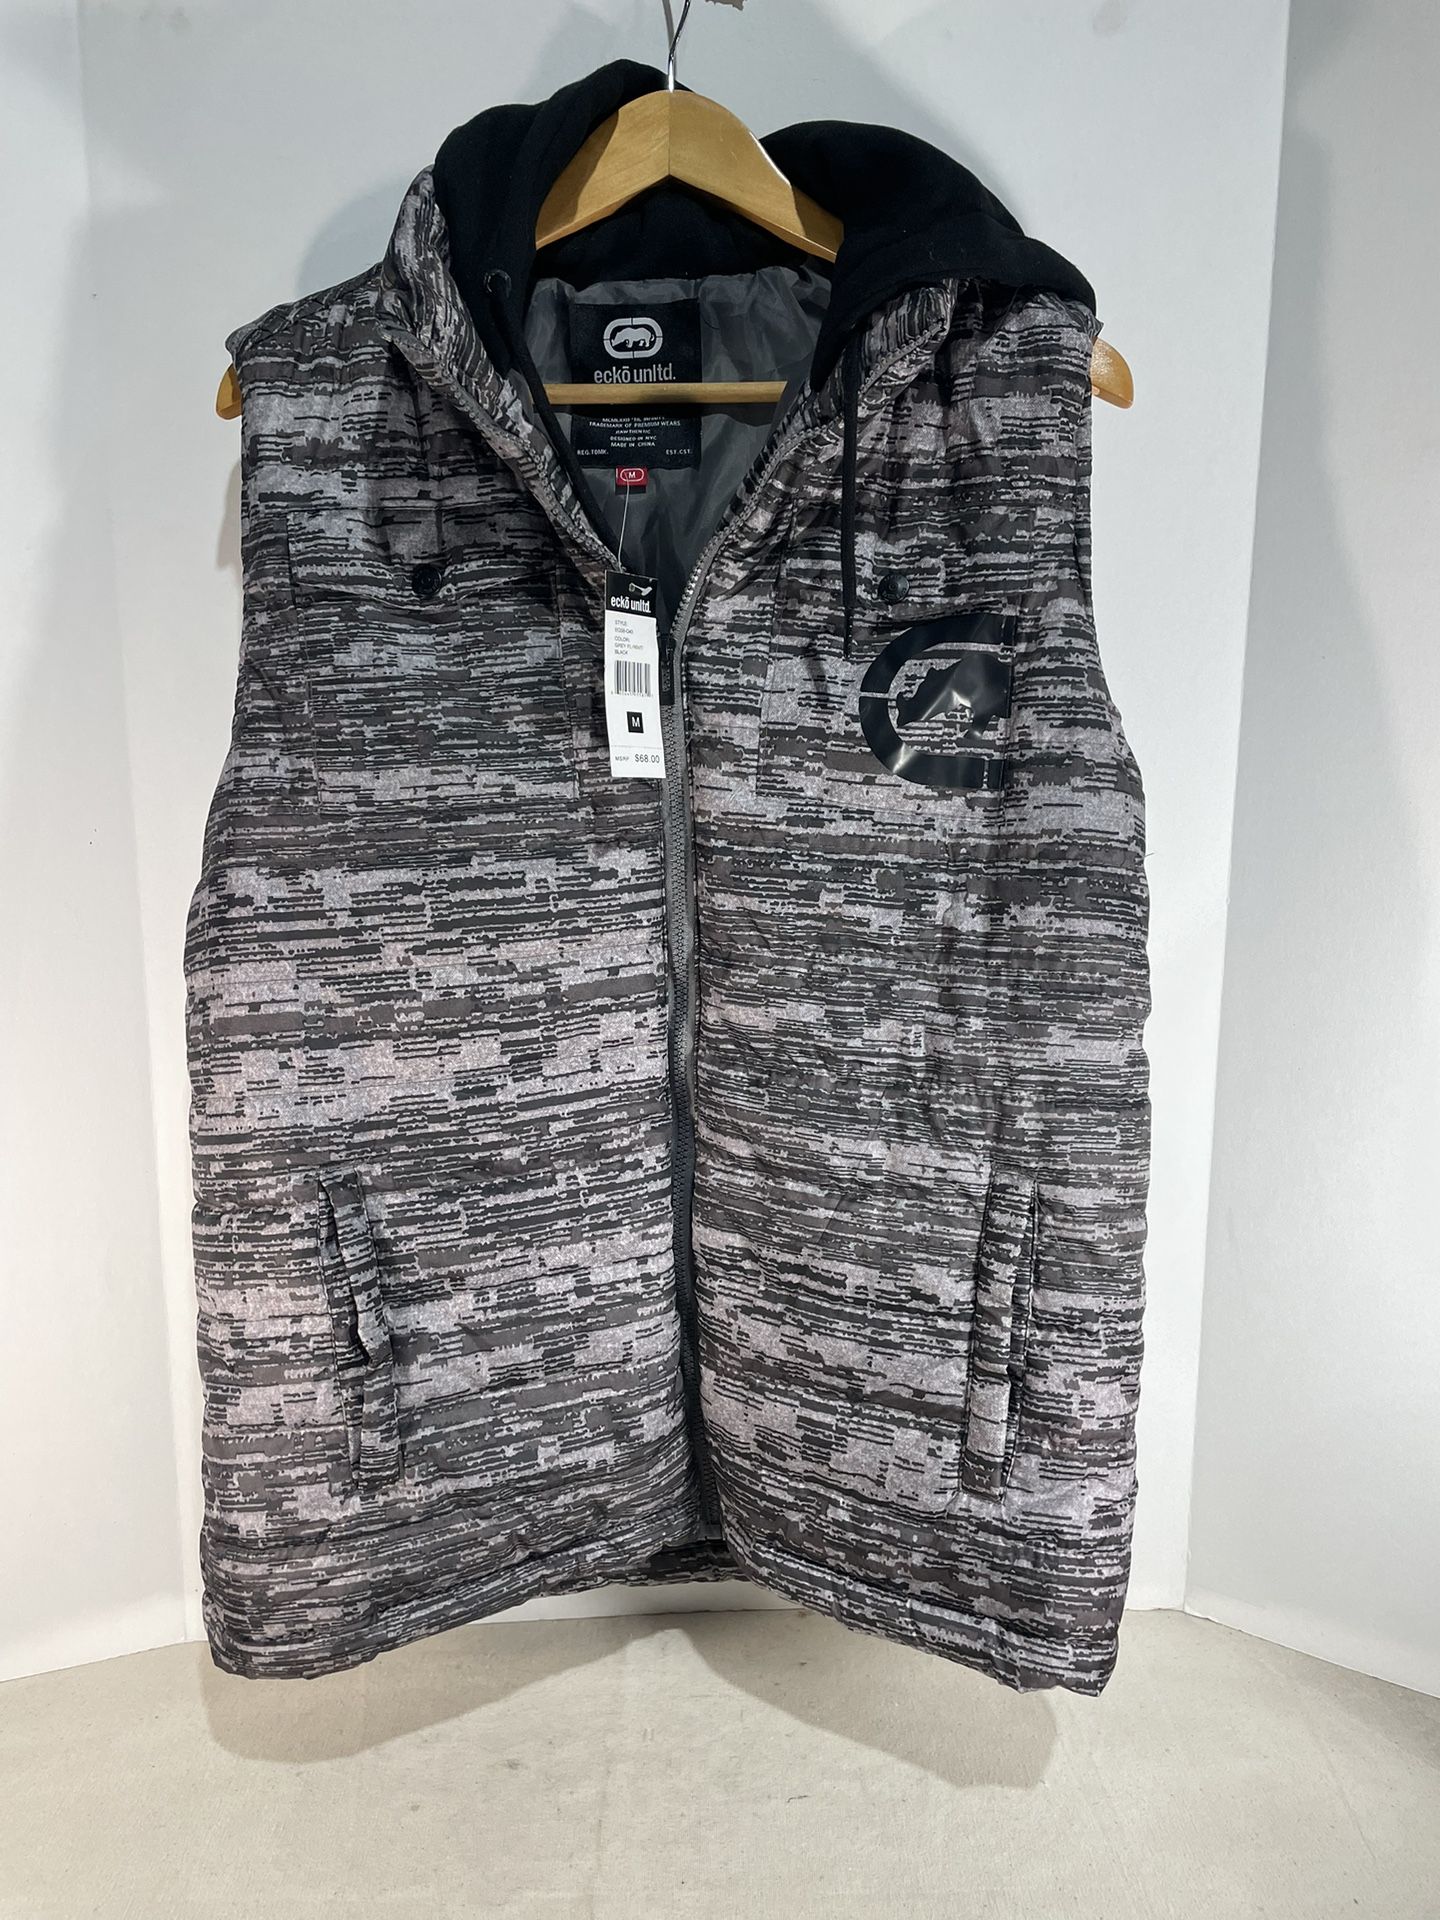 Ecko Unltd Hooded Puffer Vest Men's Size M Camo full zip up sleeveless